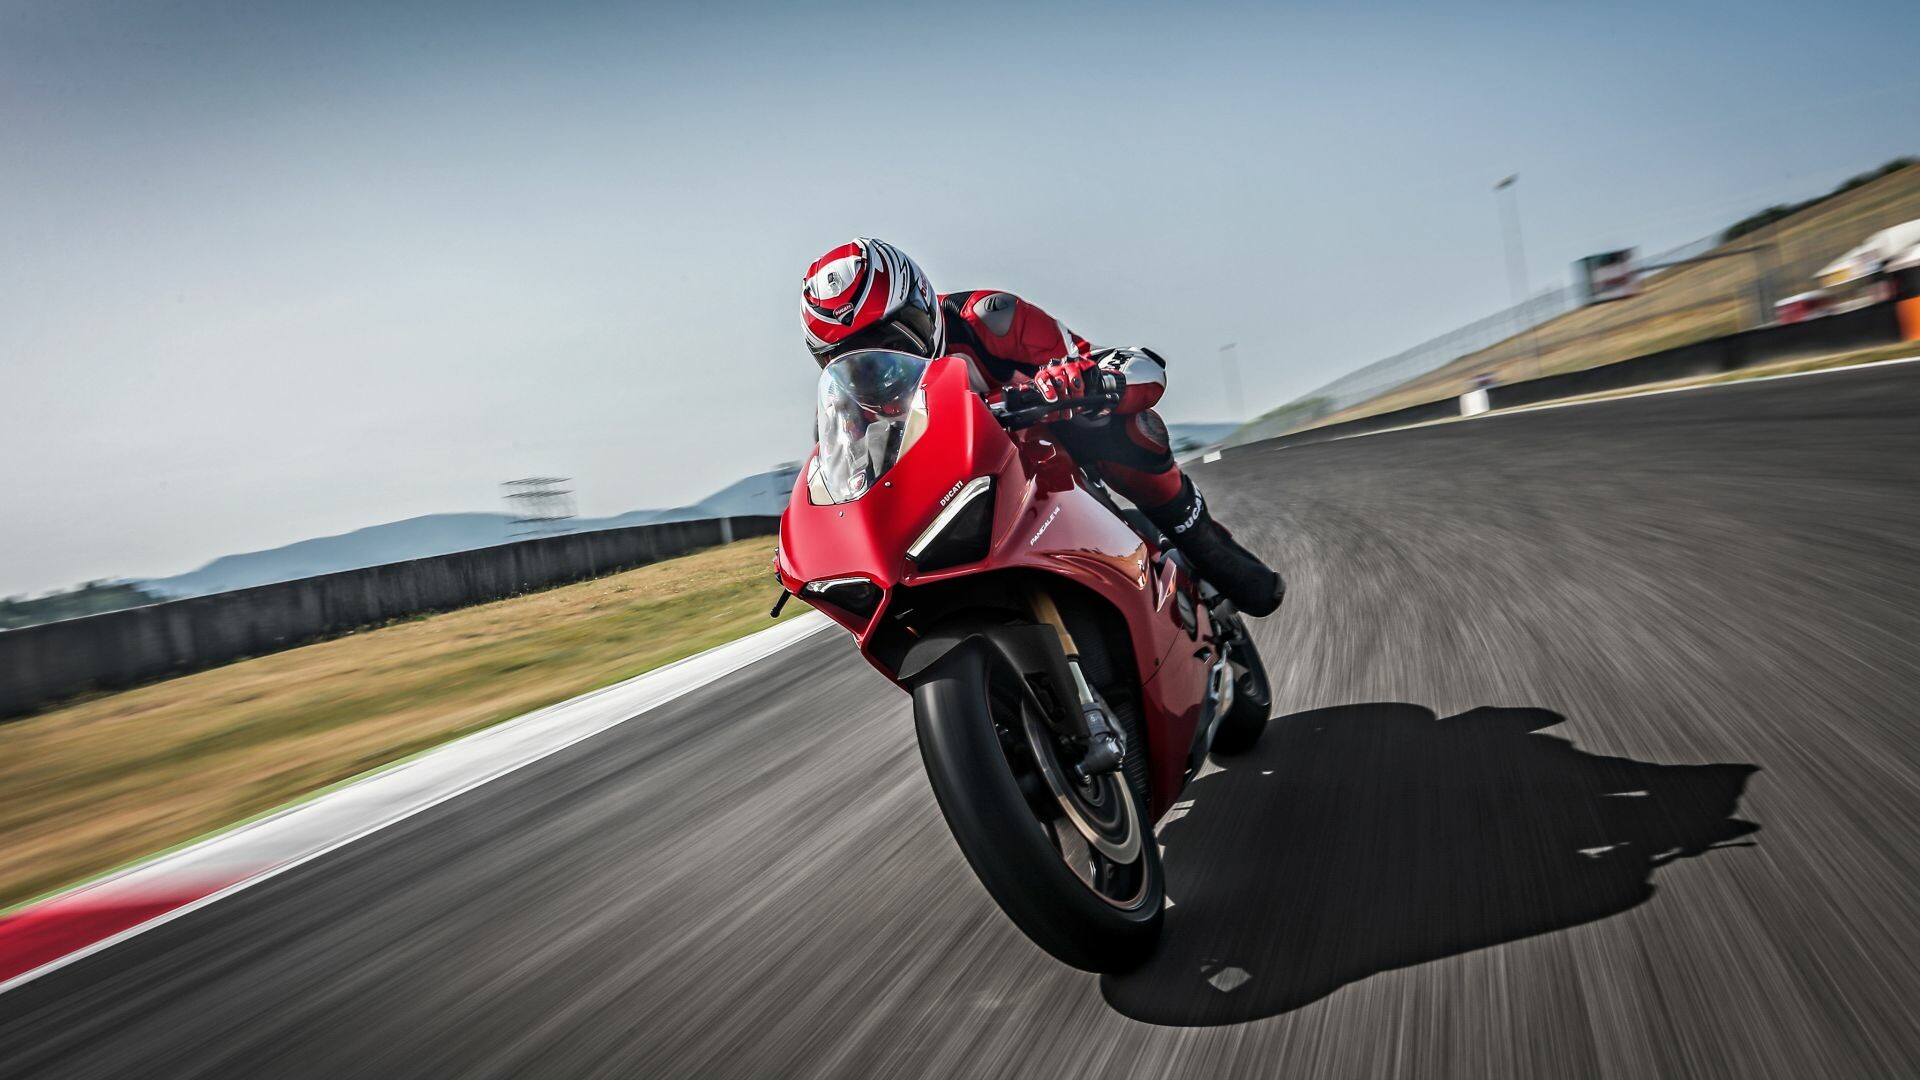 Ducati: Panigale V4 Speciale, Racing bike, Italian motorcycles. 1920x1080 Full HD Wallpaper.